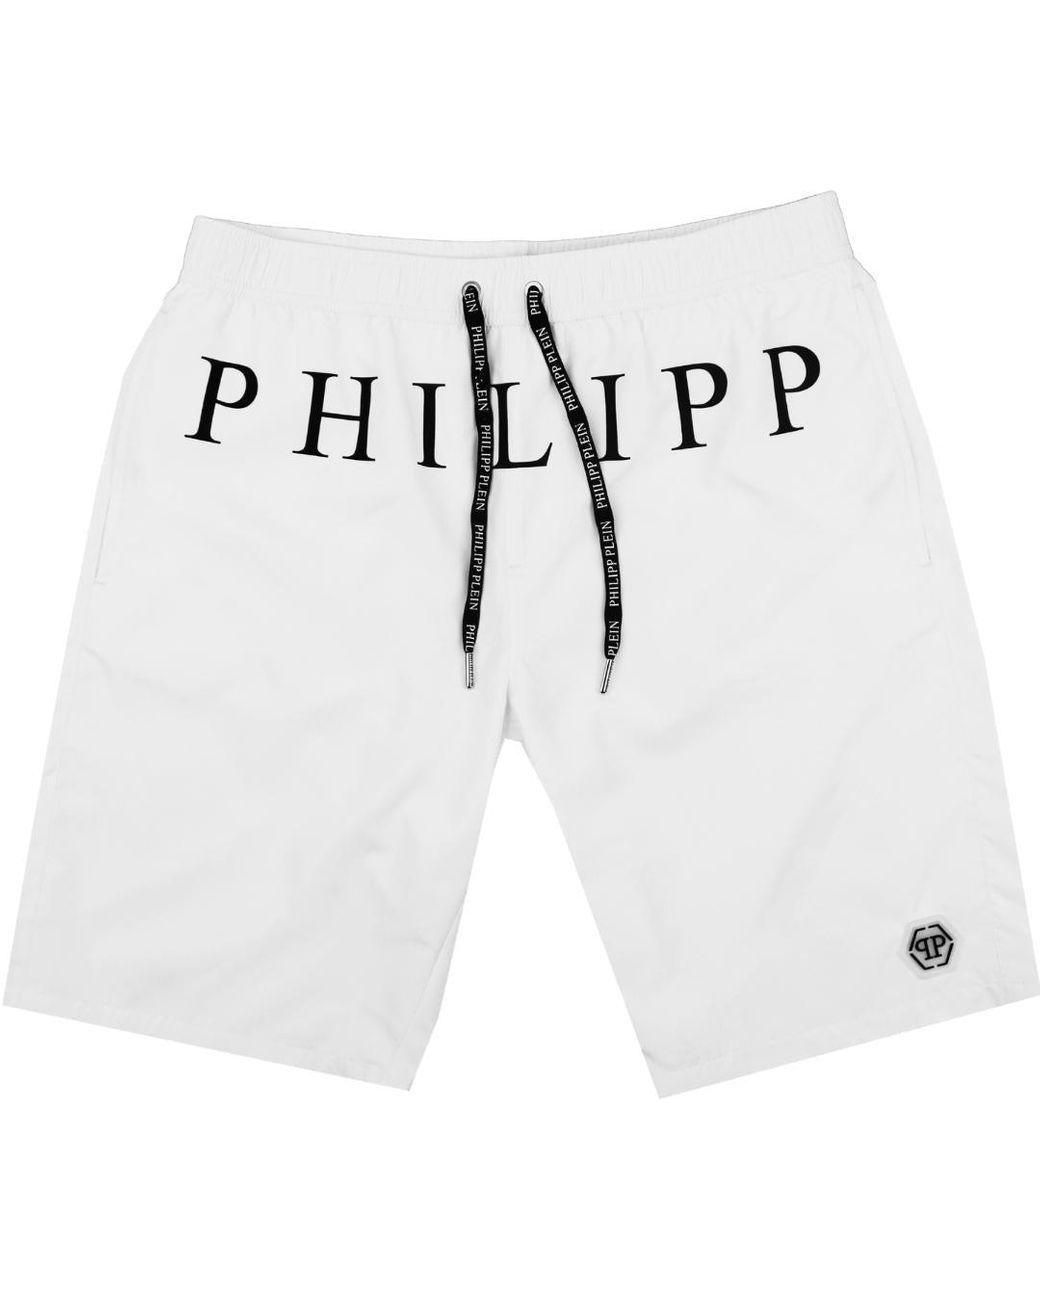 Philipp Plein Cupp13 M0199 Black Swim Shorts in Grey for Men Save 34% Mens Clothing Beachwear Boardshorts and swim shorts 